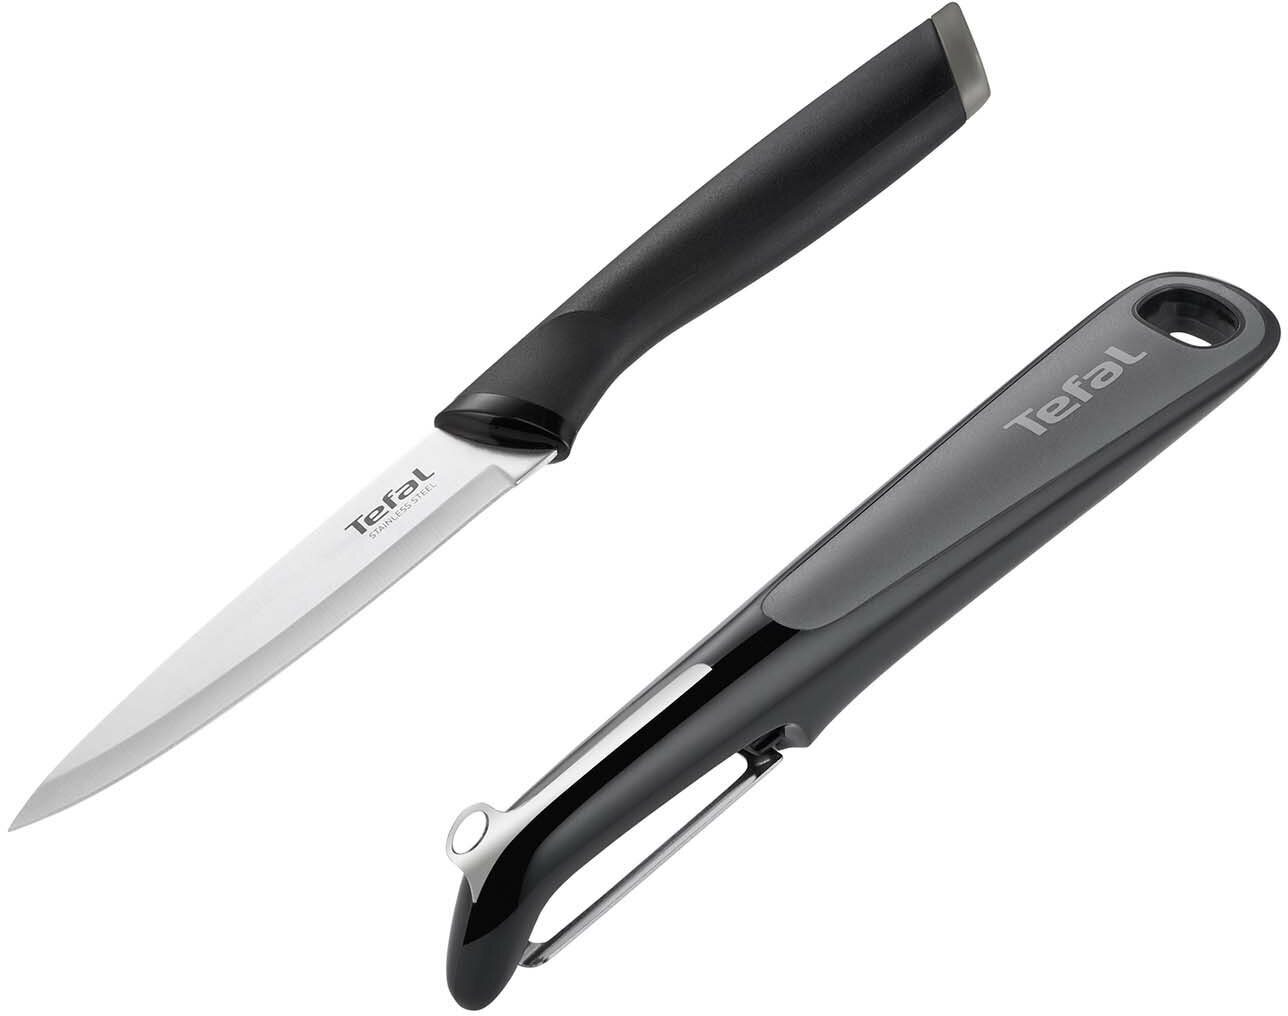 Набор кухонных ножей Tefal Essential 12см K2219255